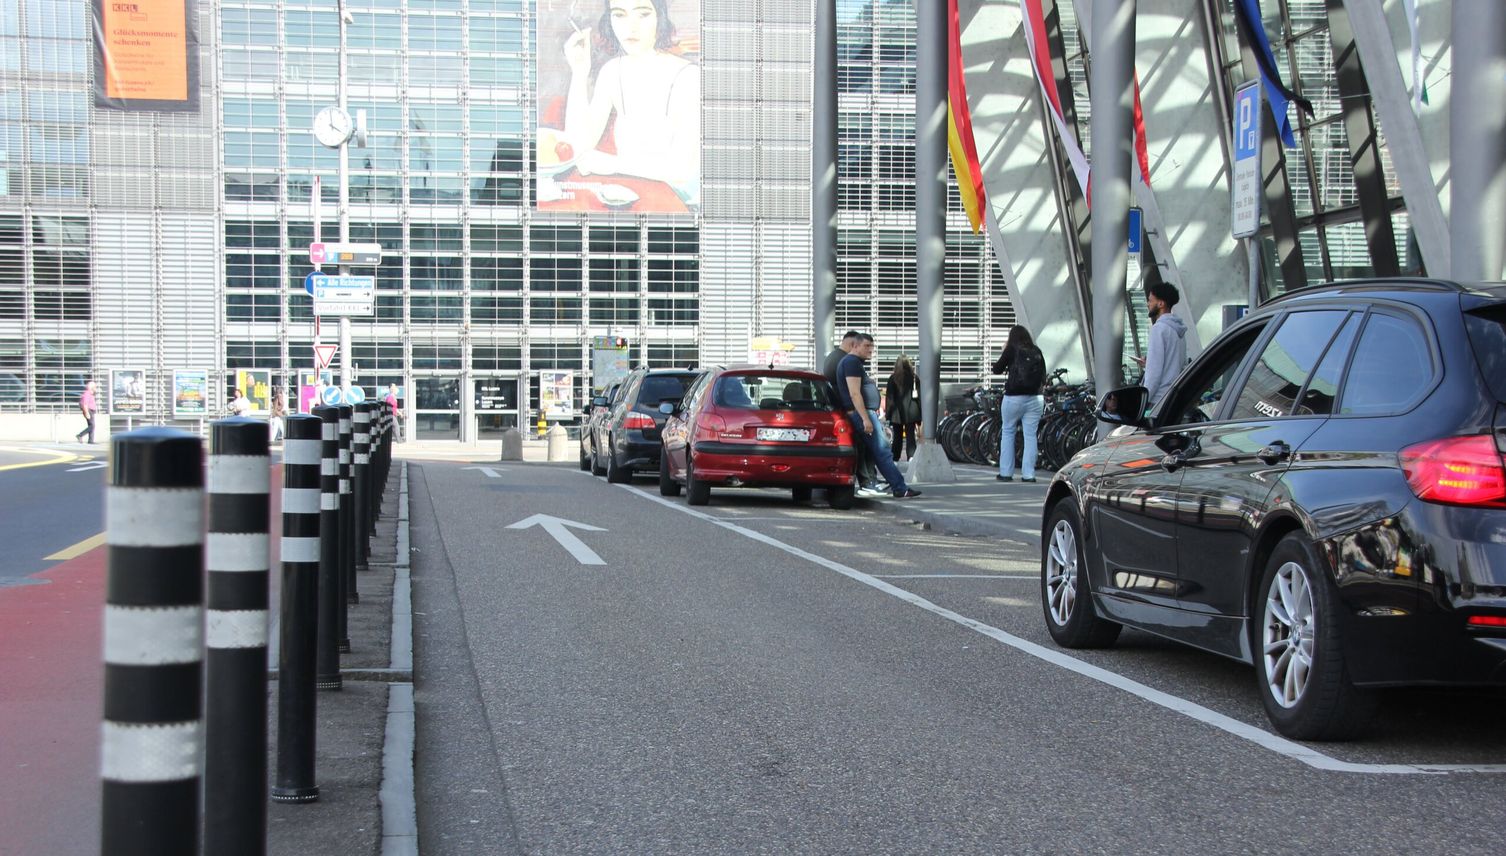 Kriegen Cars am Bahnhof Luzern die Kurve? Jurist übt Kritik